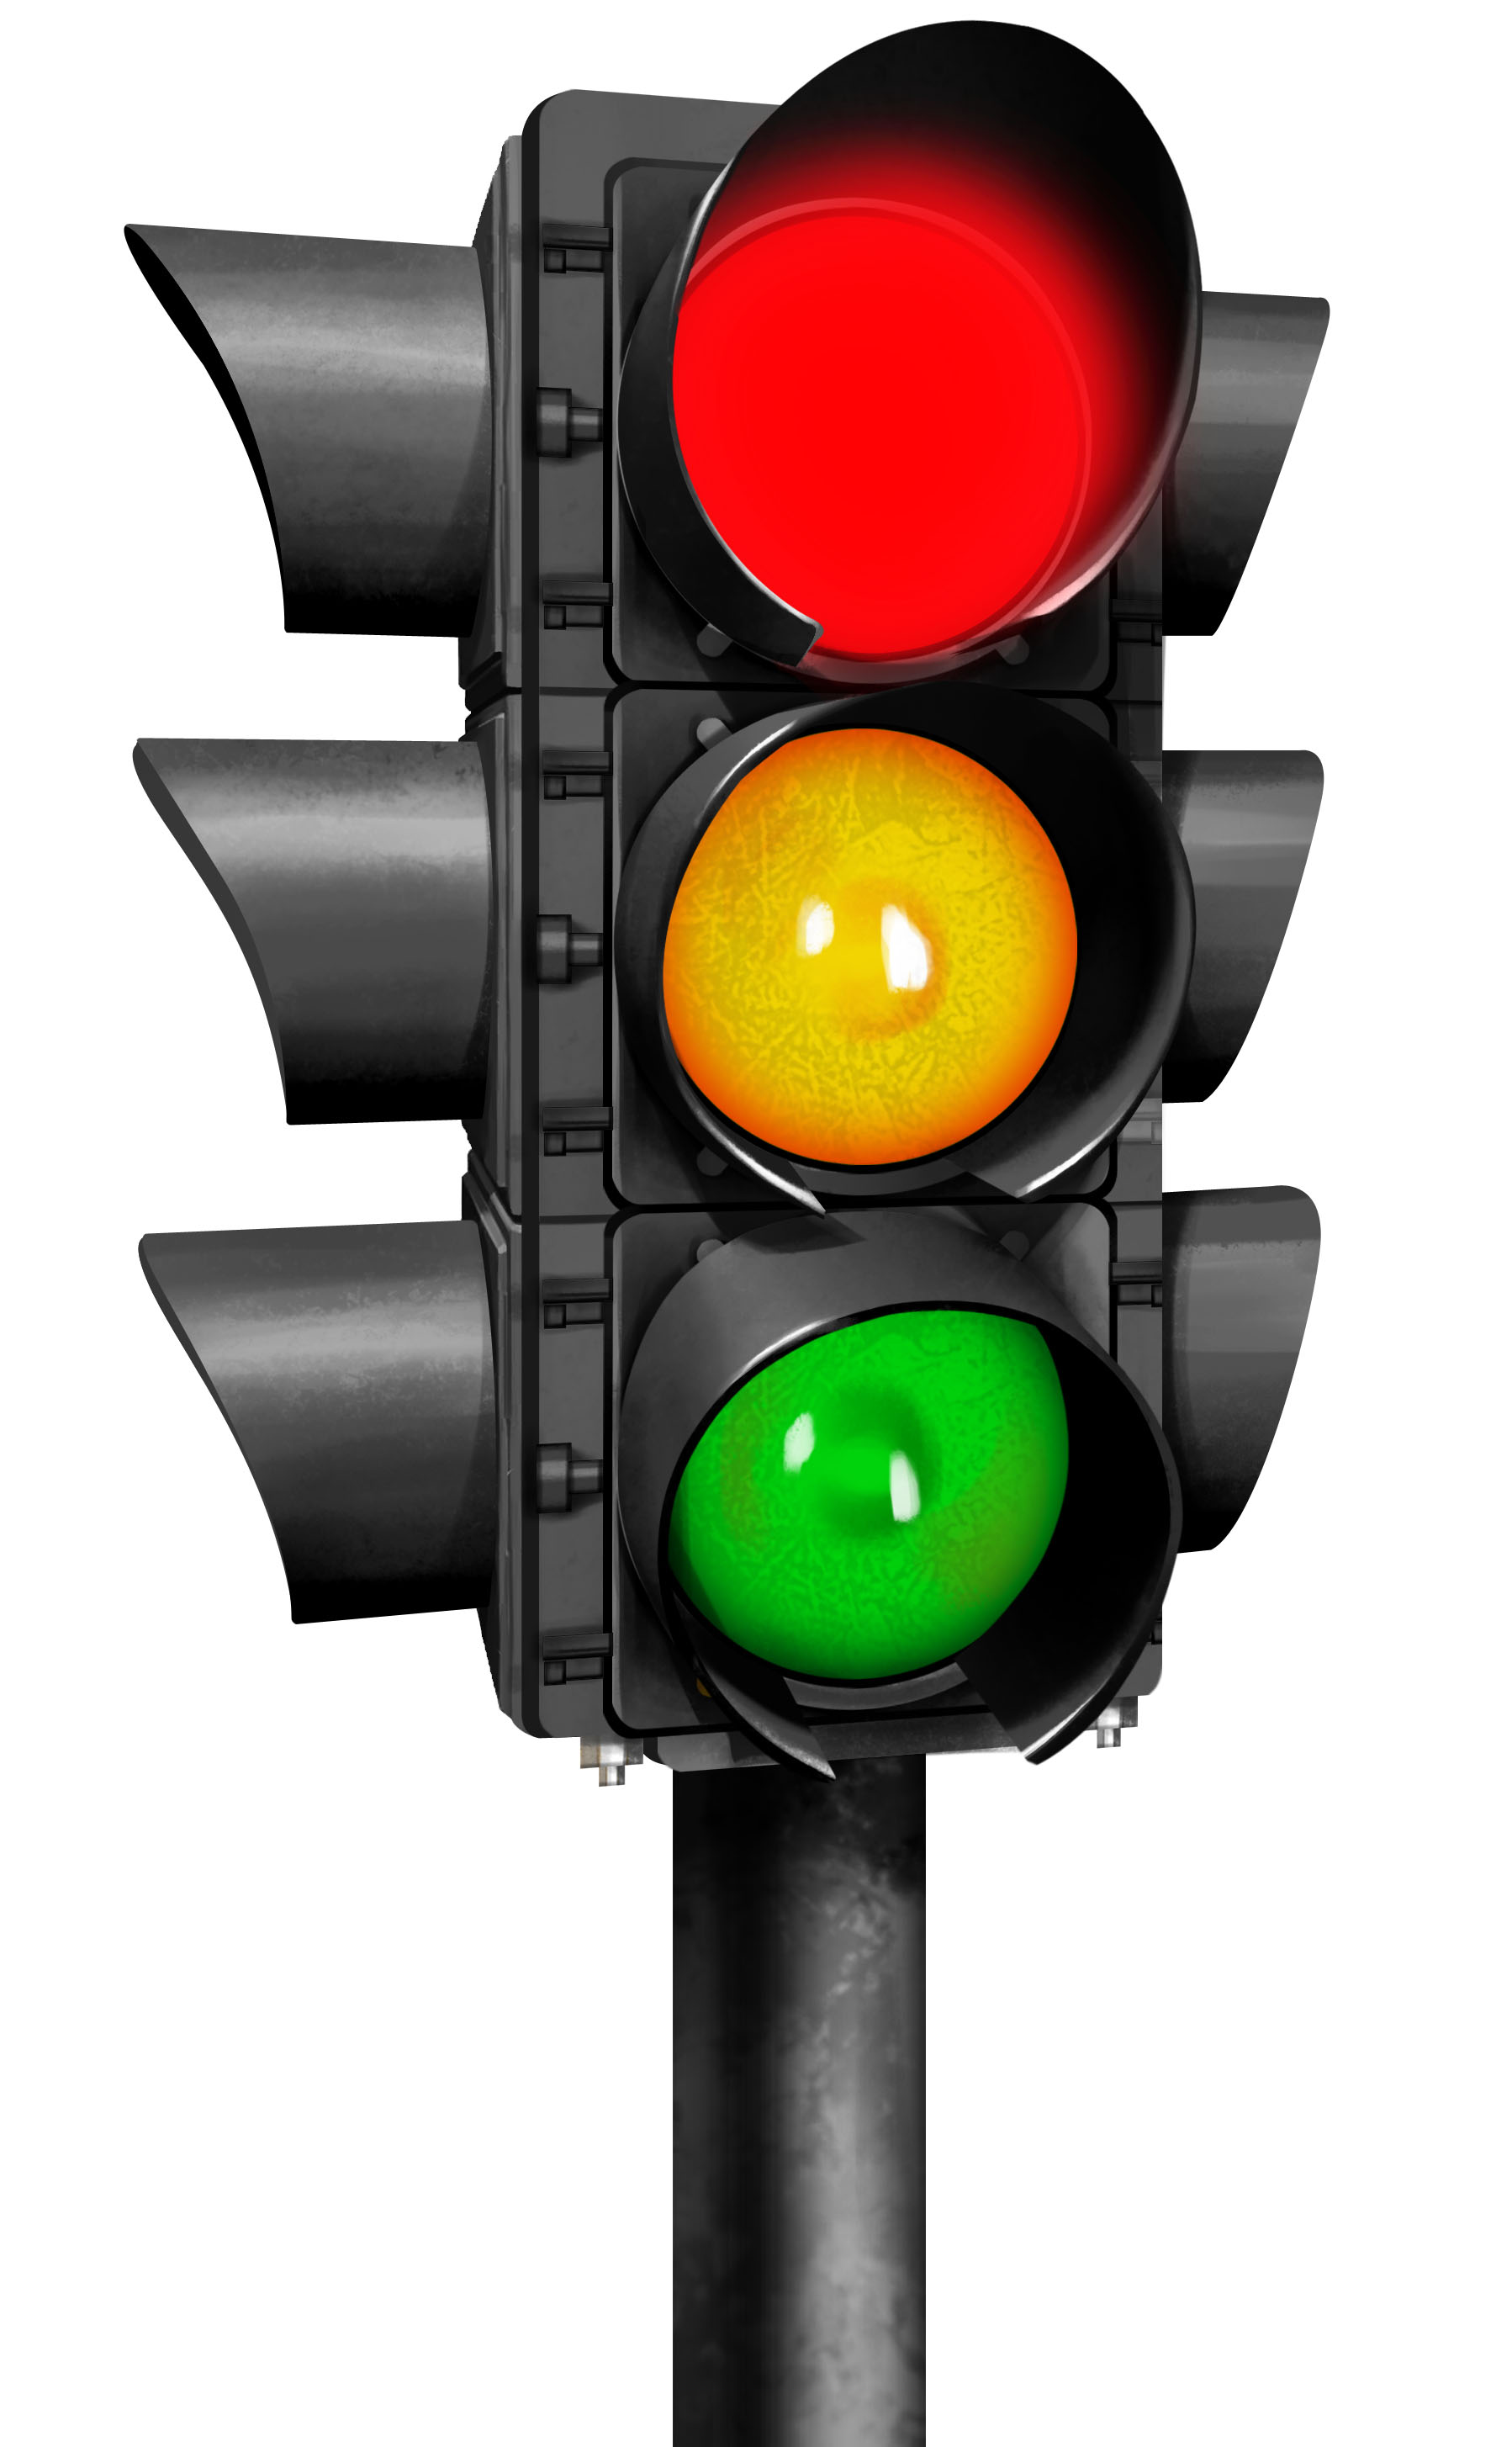 File:Traffic Light - Realistic.jpg - Wikimedia Commons